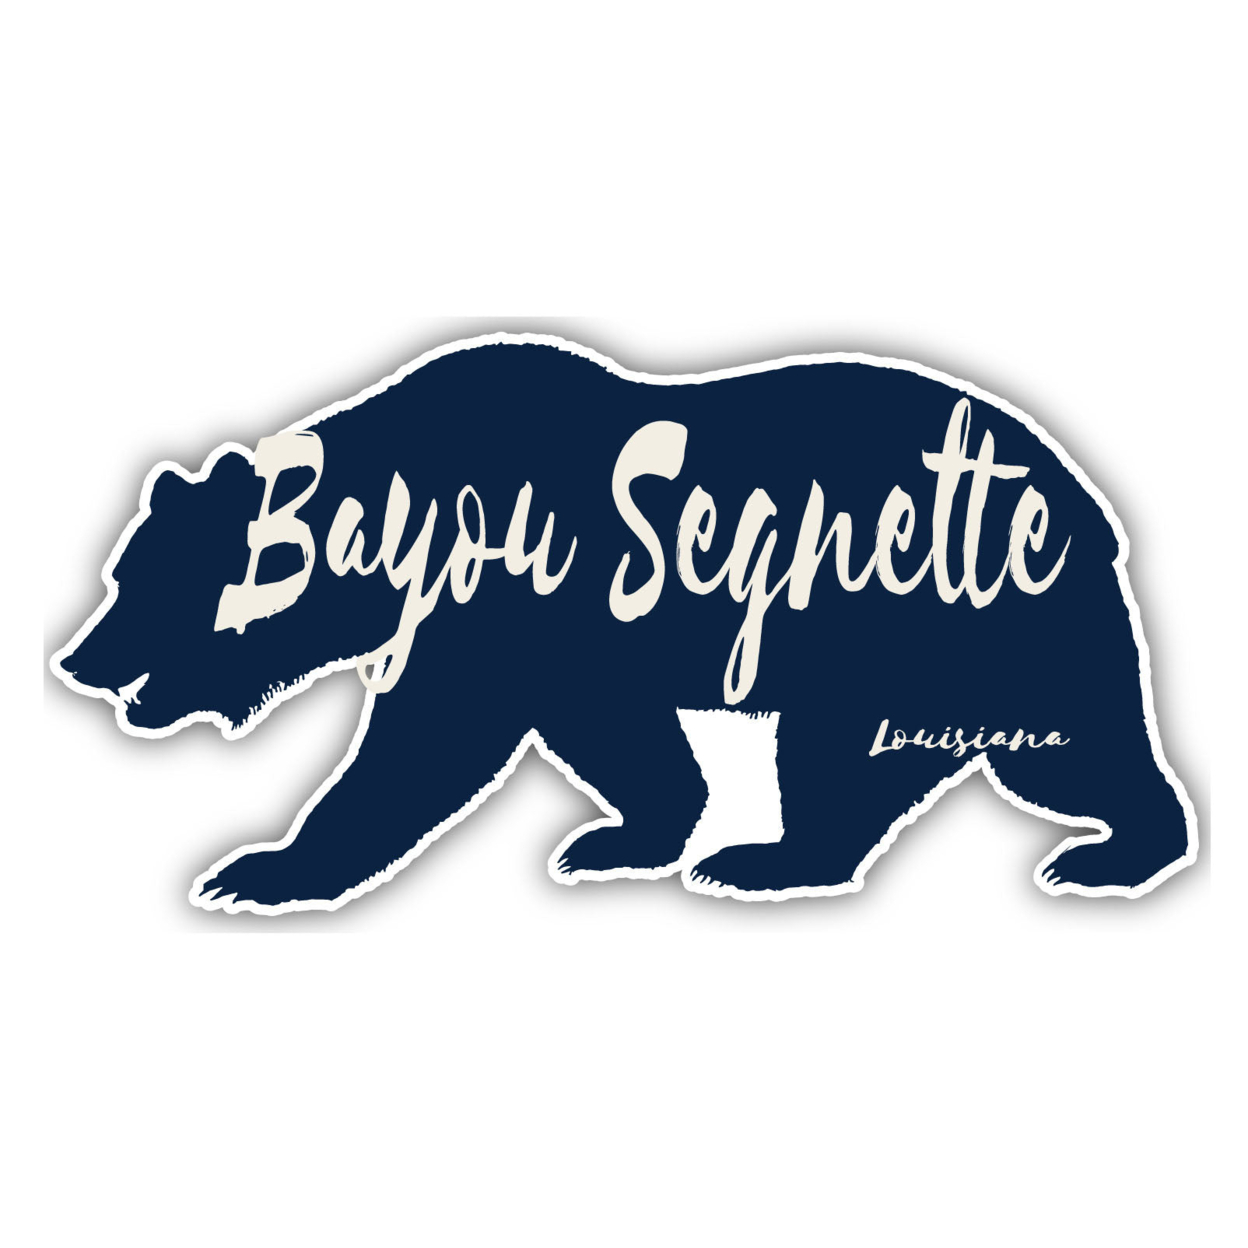 Bayou Segnette Louisiana Souvenir Decorative Stickers (Choose Theme And Size) - Single Unit, 10-Inch, Bear